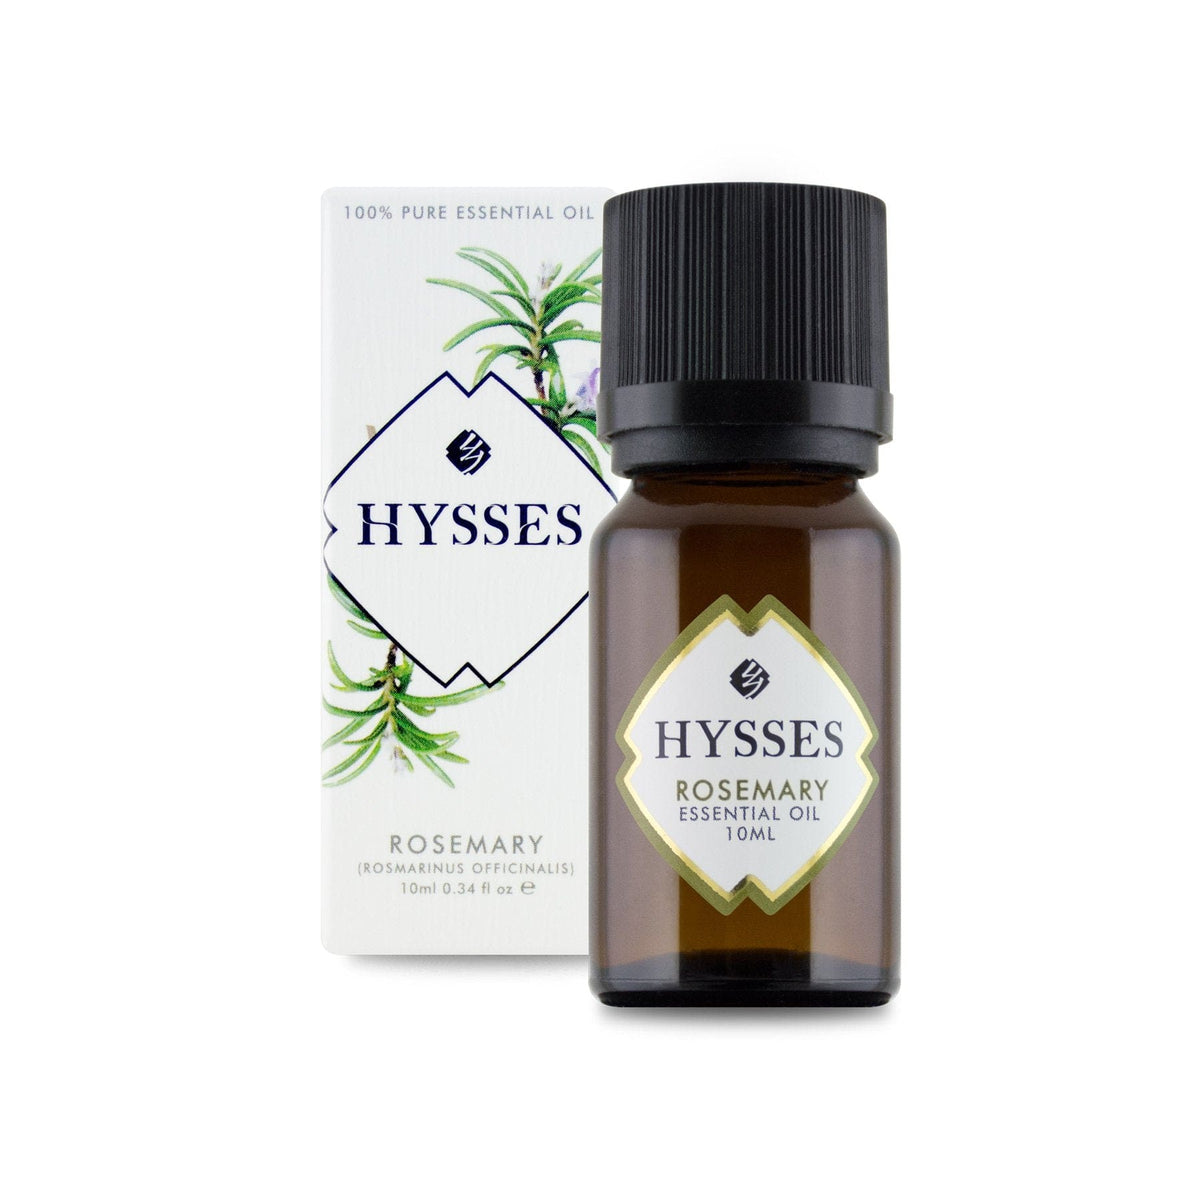 Hysses Essential Oil Essential Oil Rosemary, 10ml